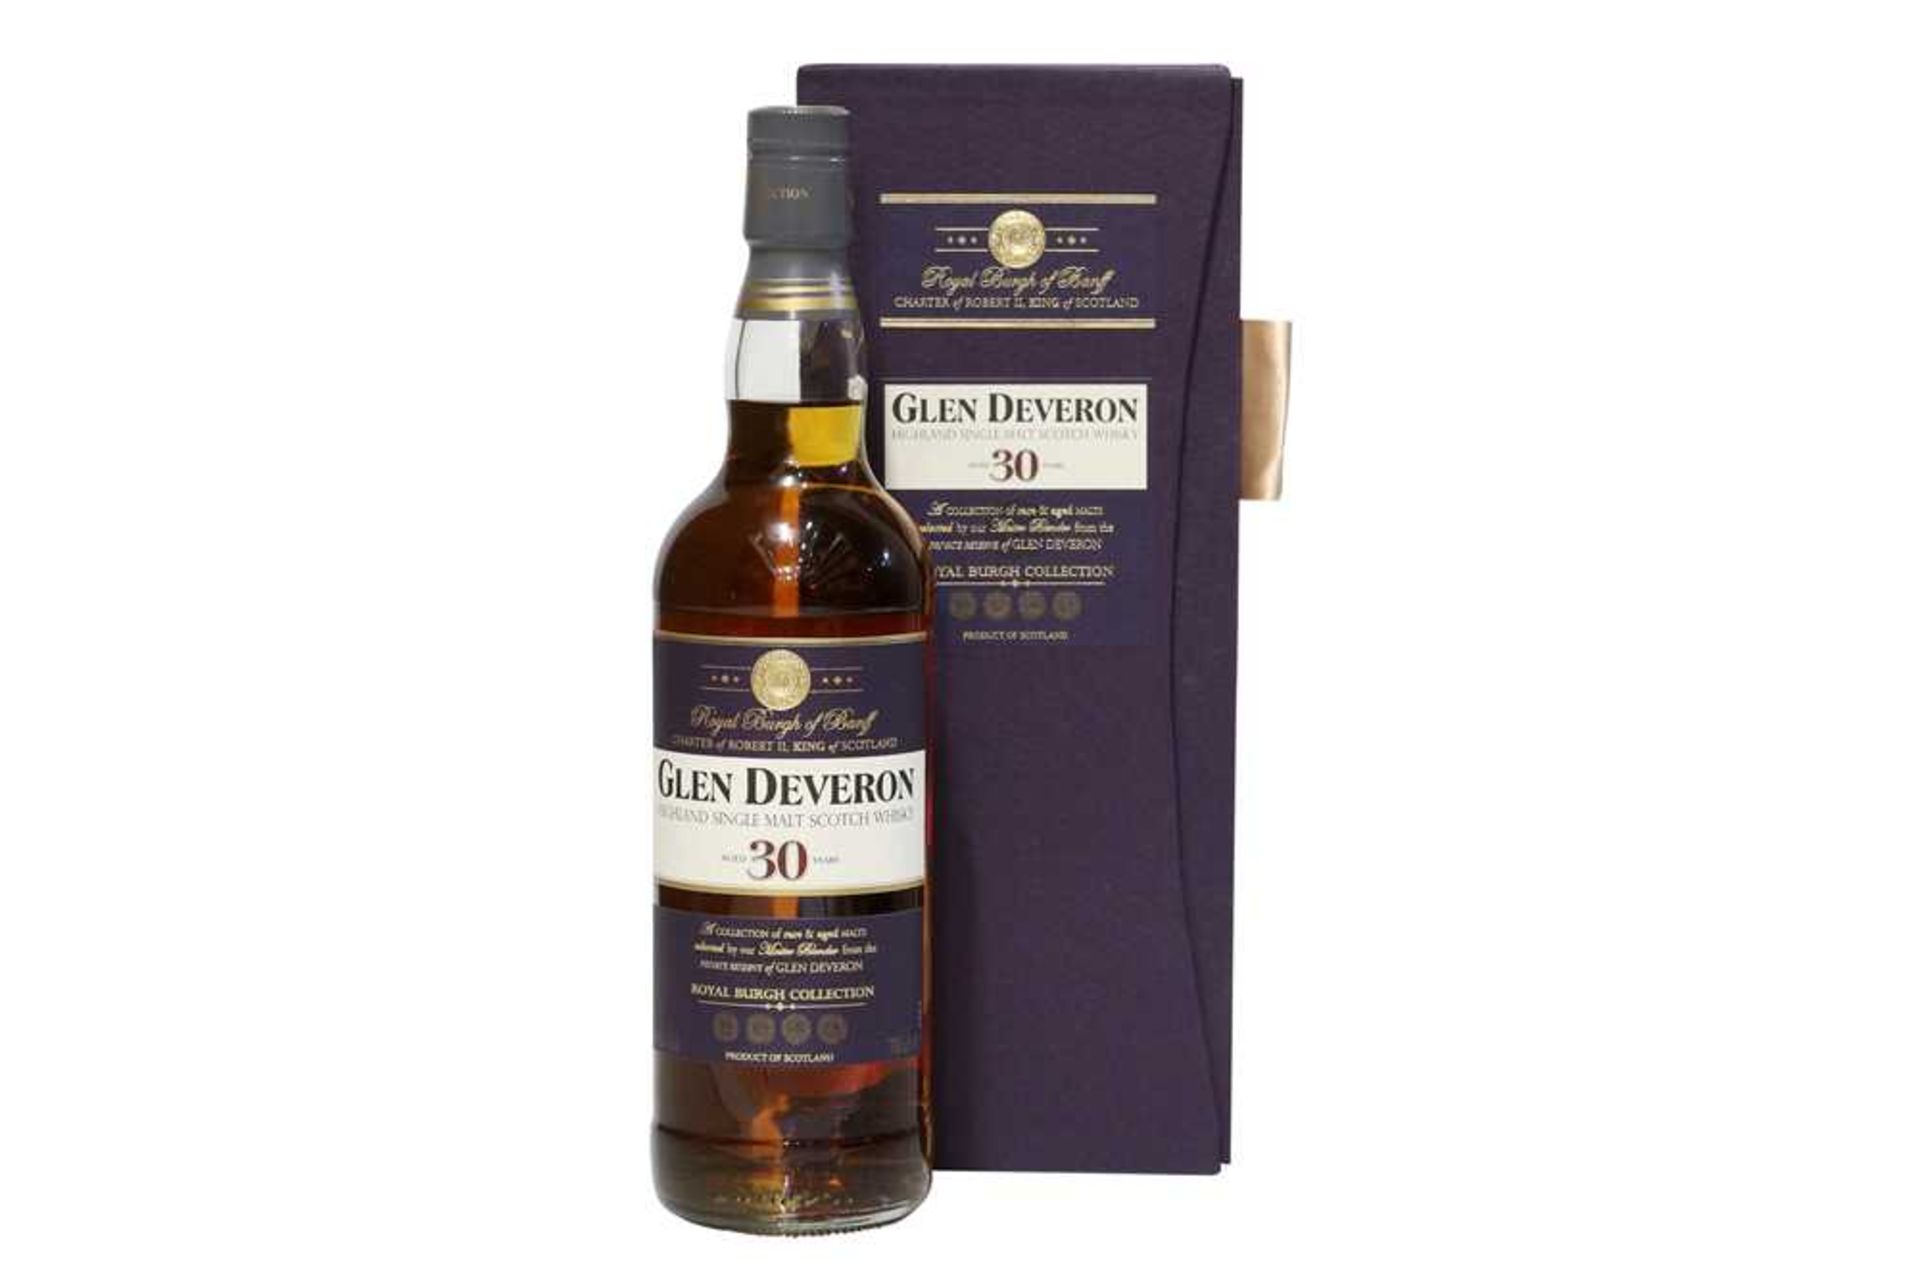 Glen Deveron, Highland Single Malt Scotch Whisky, Aged 30 Years, one bottle